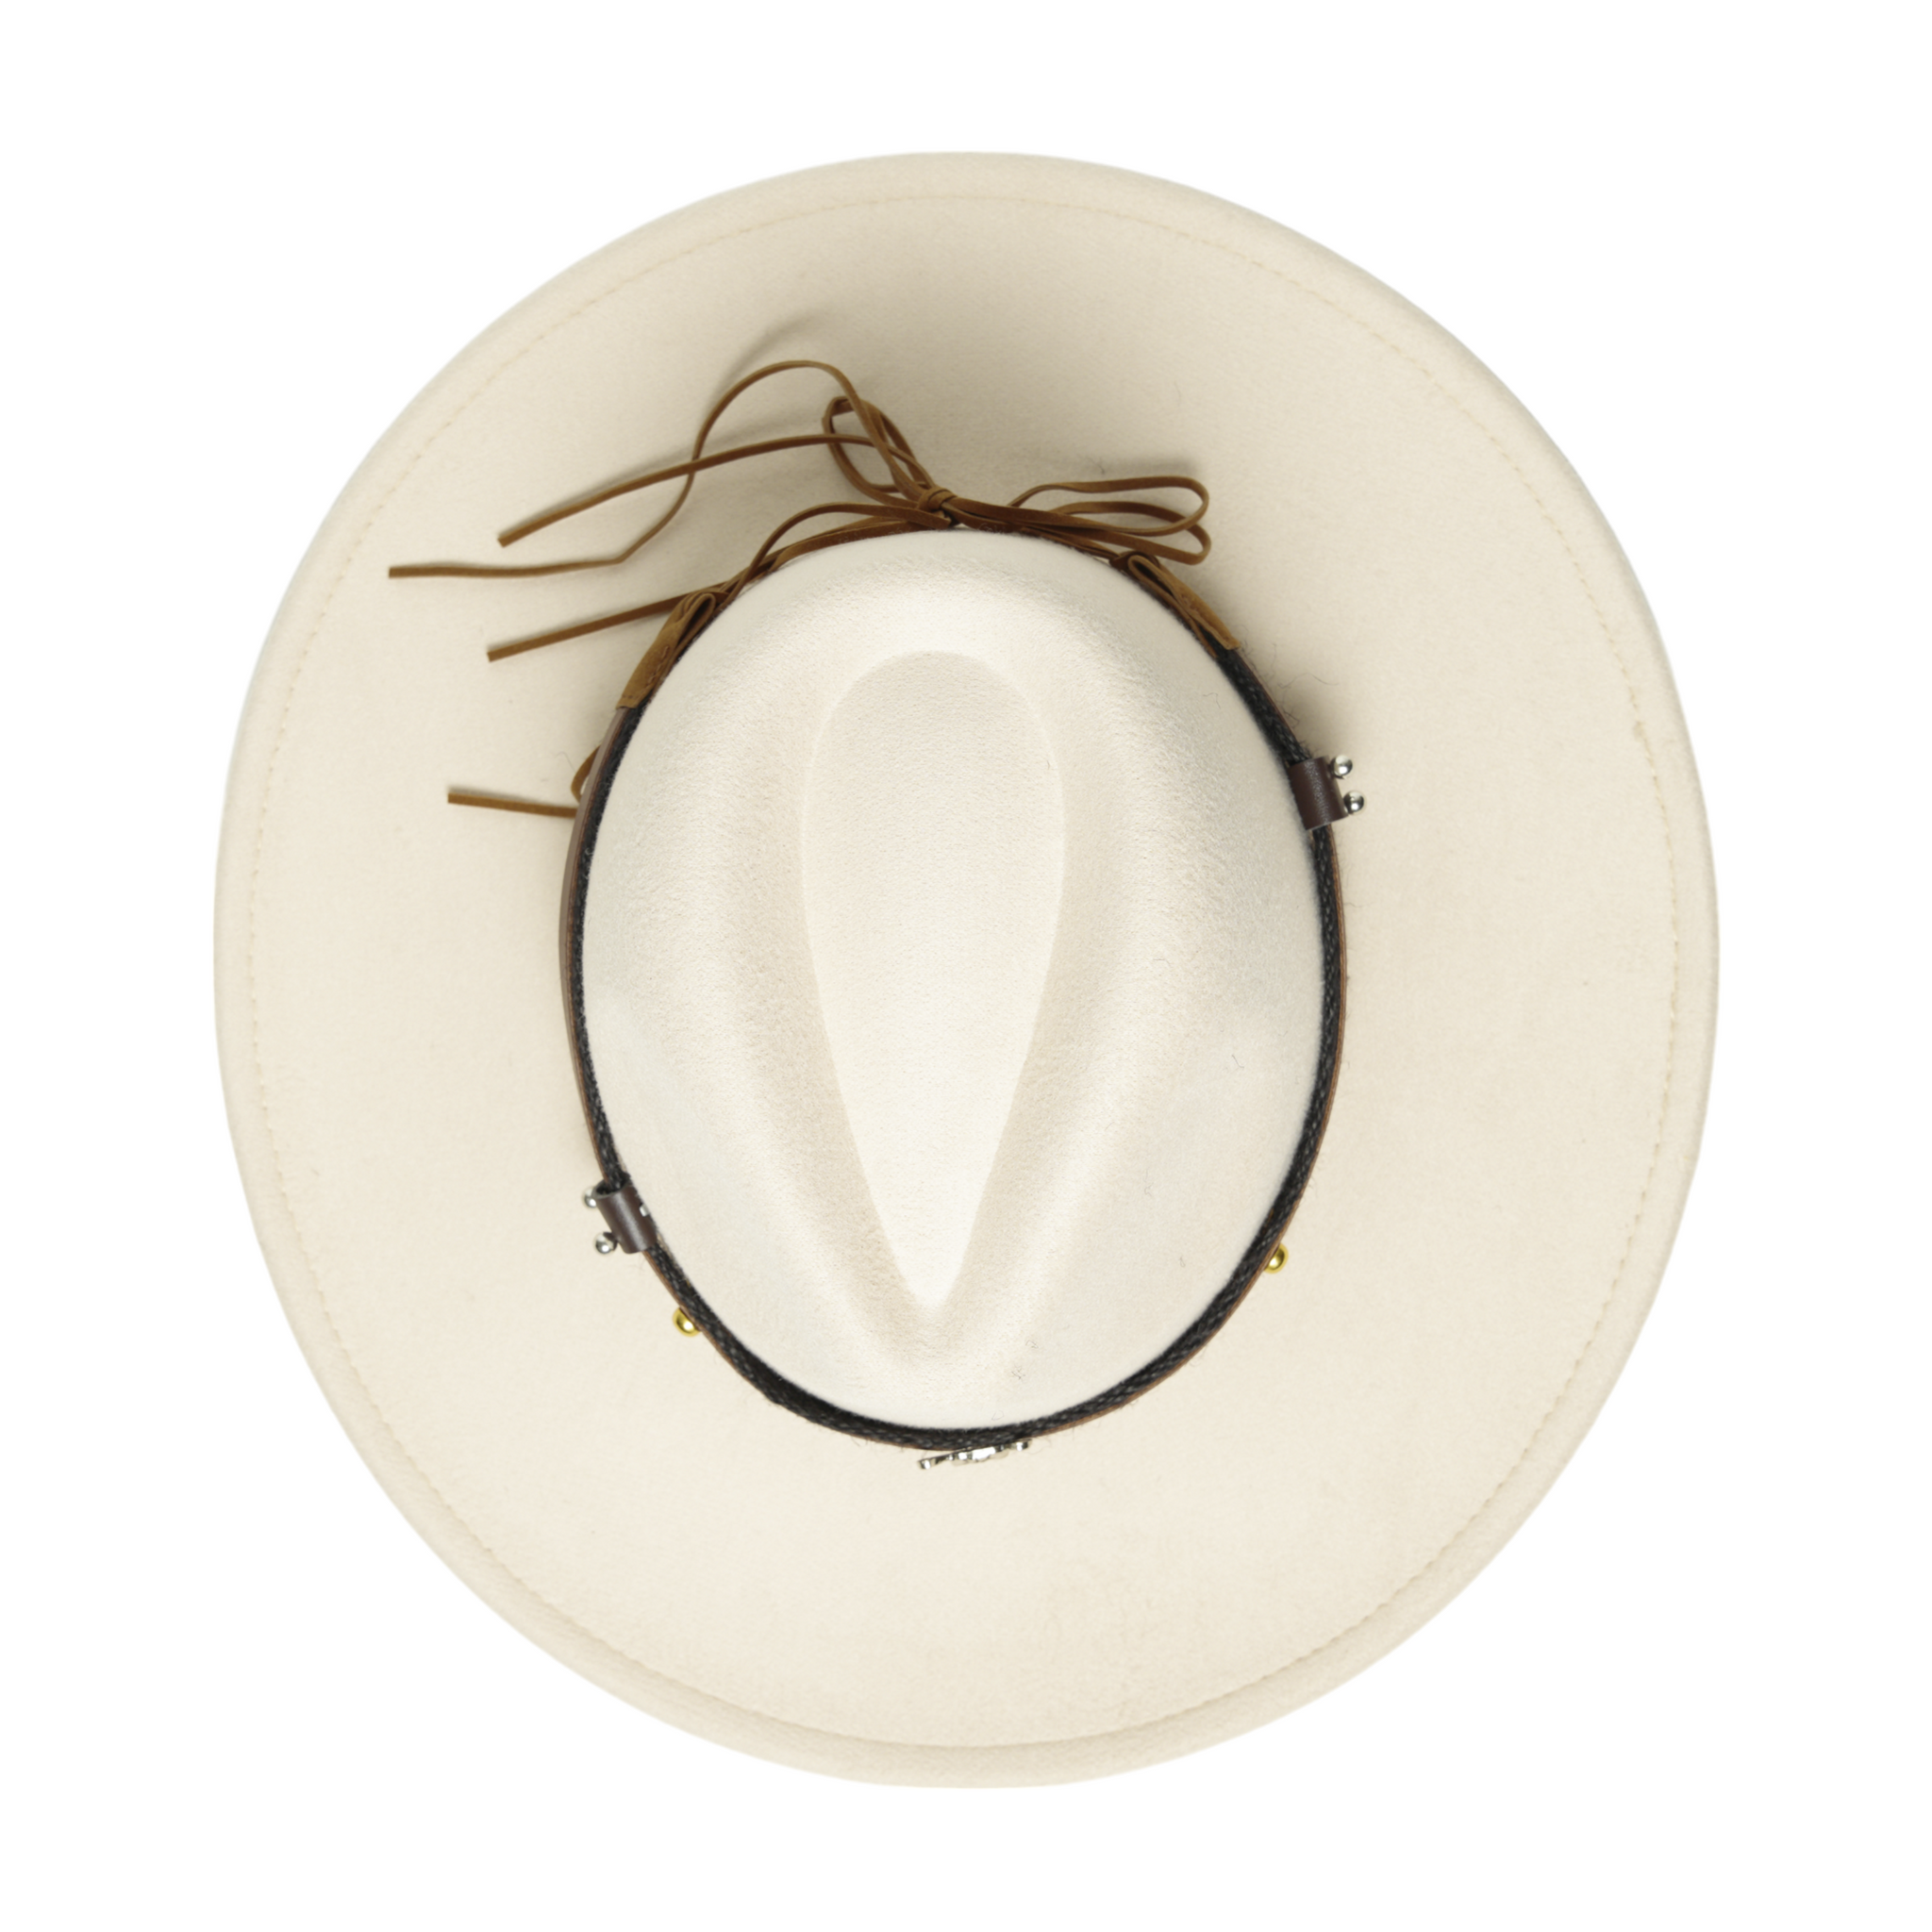 Chokore American Cowhead Fedora Hat (Off White)